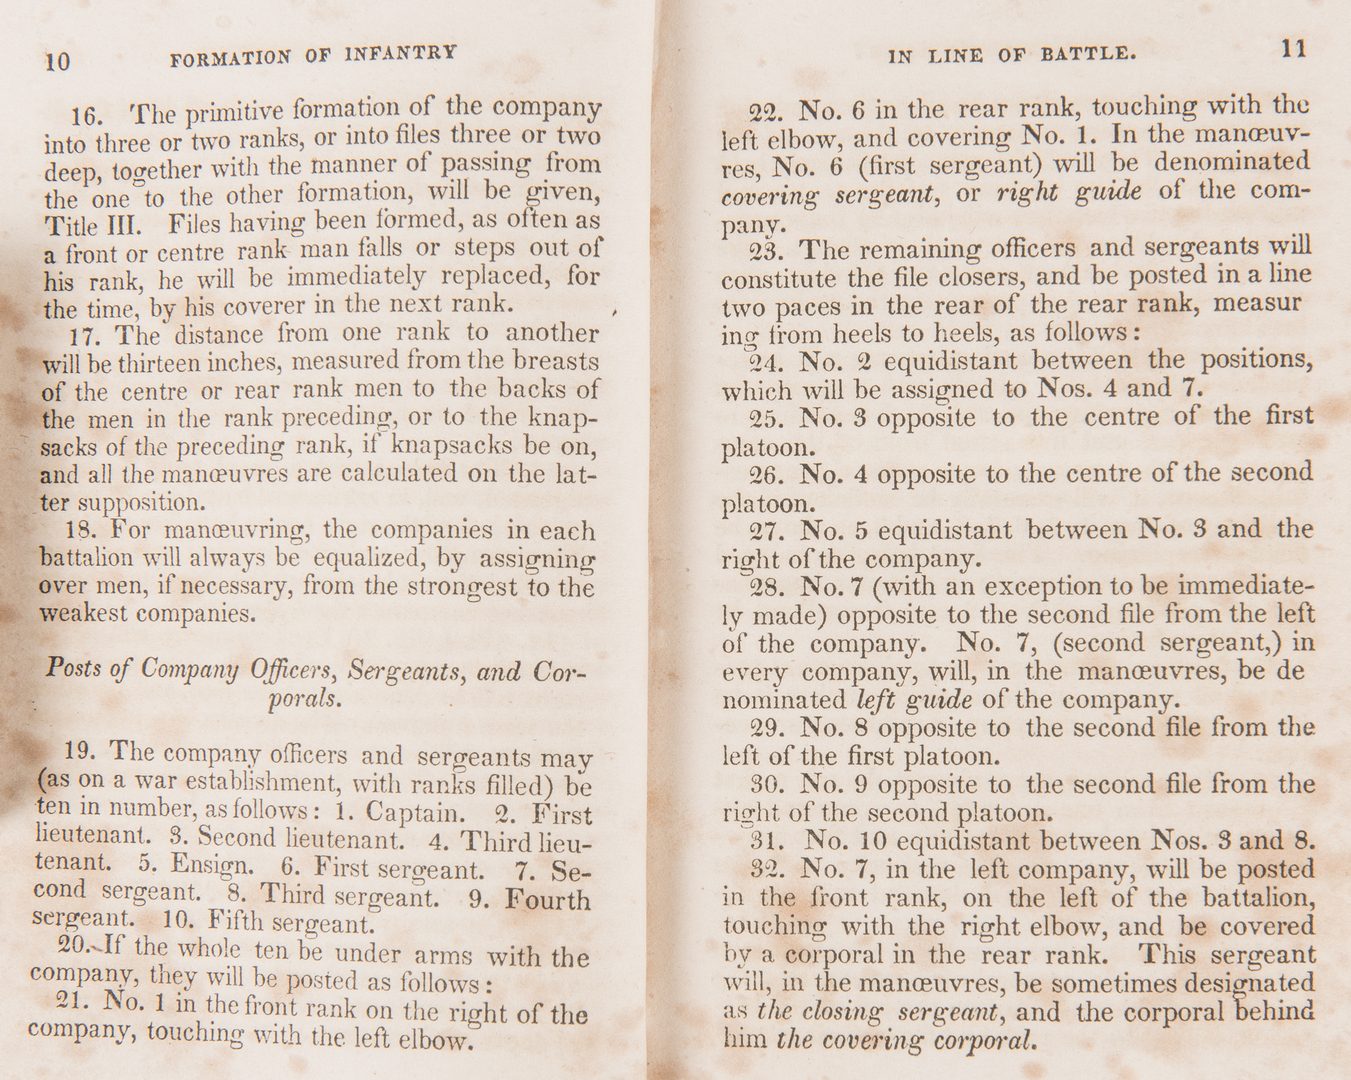 Lot 174: 2 Dearborn/Marshall Family Books, incl. Infantry-Tactics, Vol. I, 1835